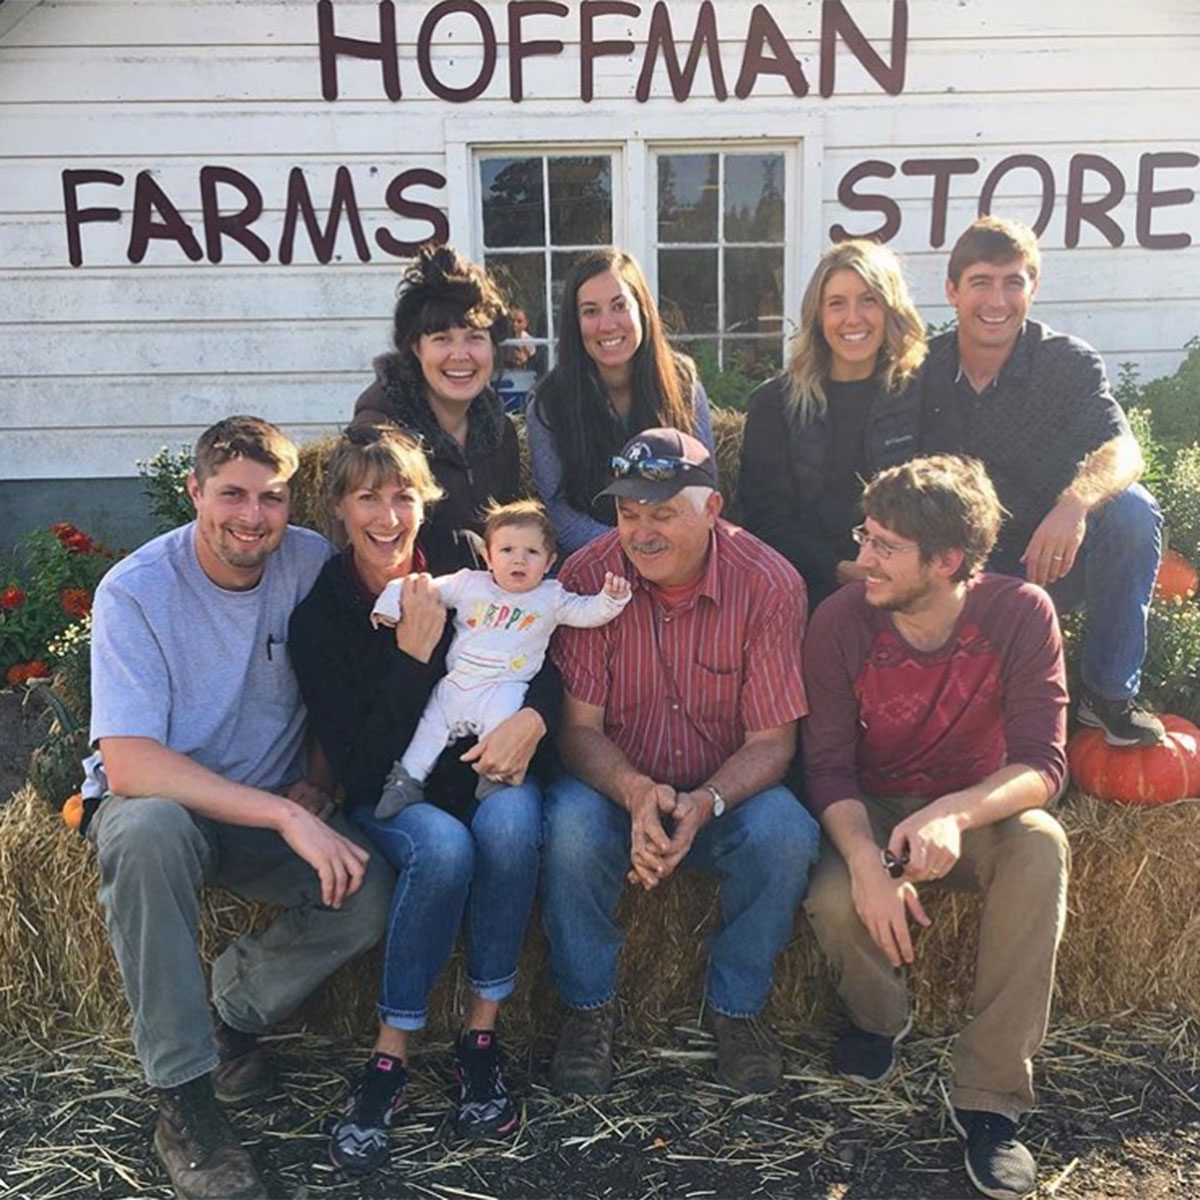 Hoffman Farms Store